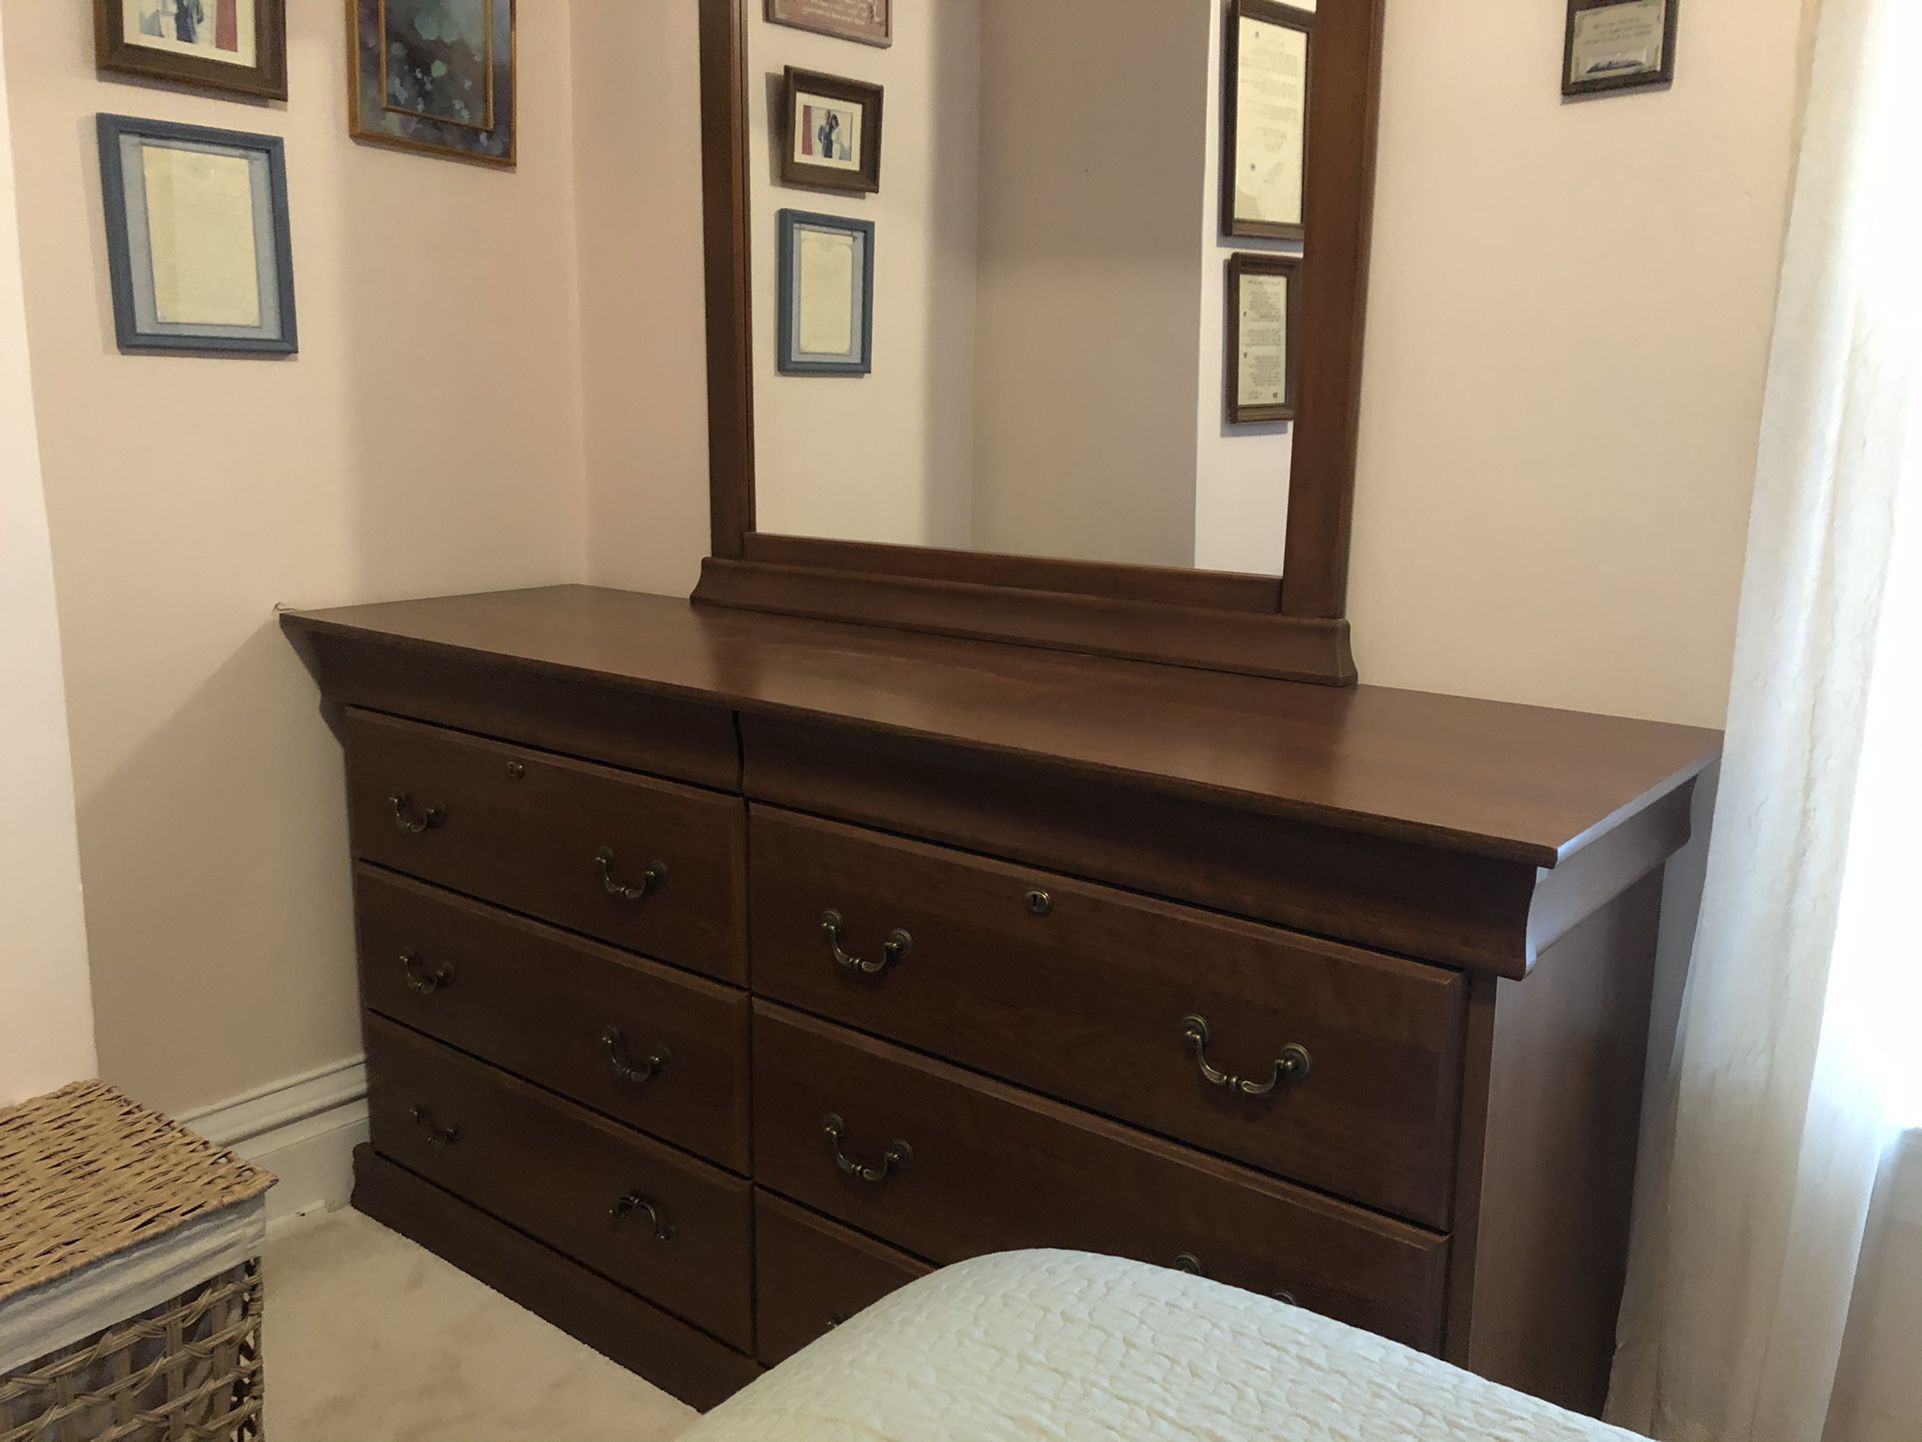 5 Piece Bedroom Set (Lg. Dresser w/Mirror, Tall Dresser, Headboard w/Frame, 2 Nightstands ; Mahogany Brown